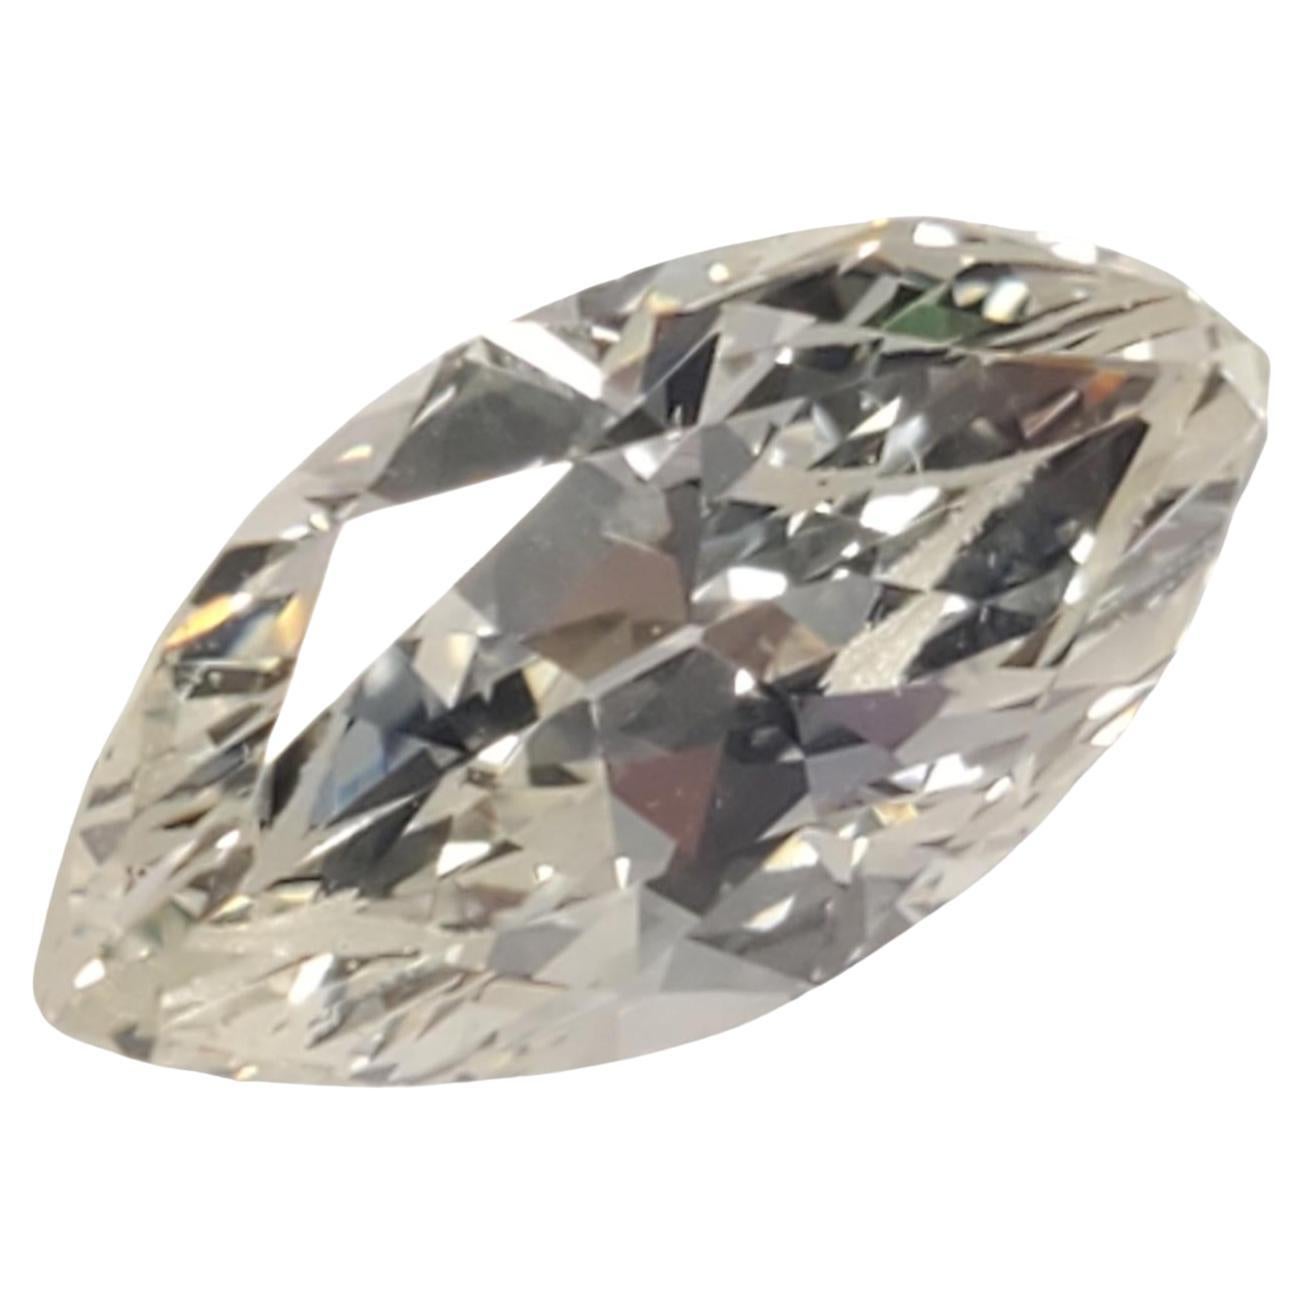 Antique Marquise Cut Diamond 2.19ct True Old Natural Diamond KL VS-SI1 For Sale